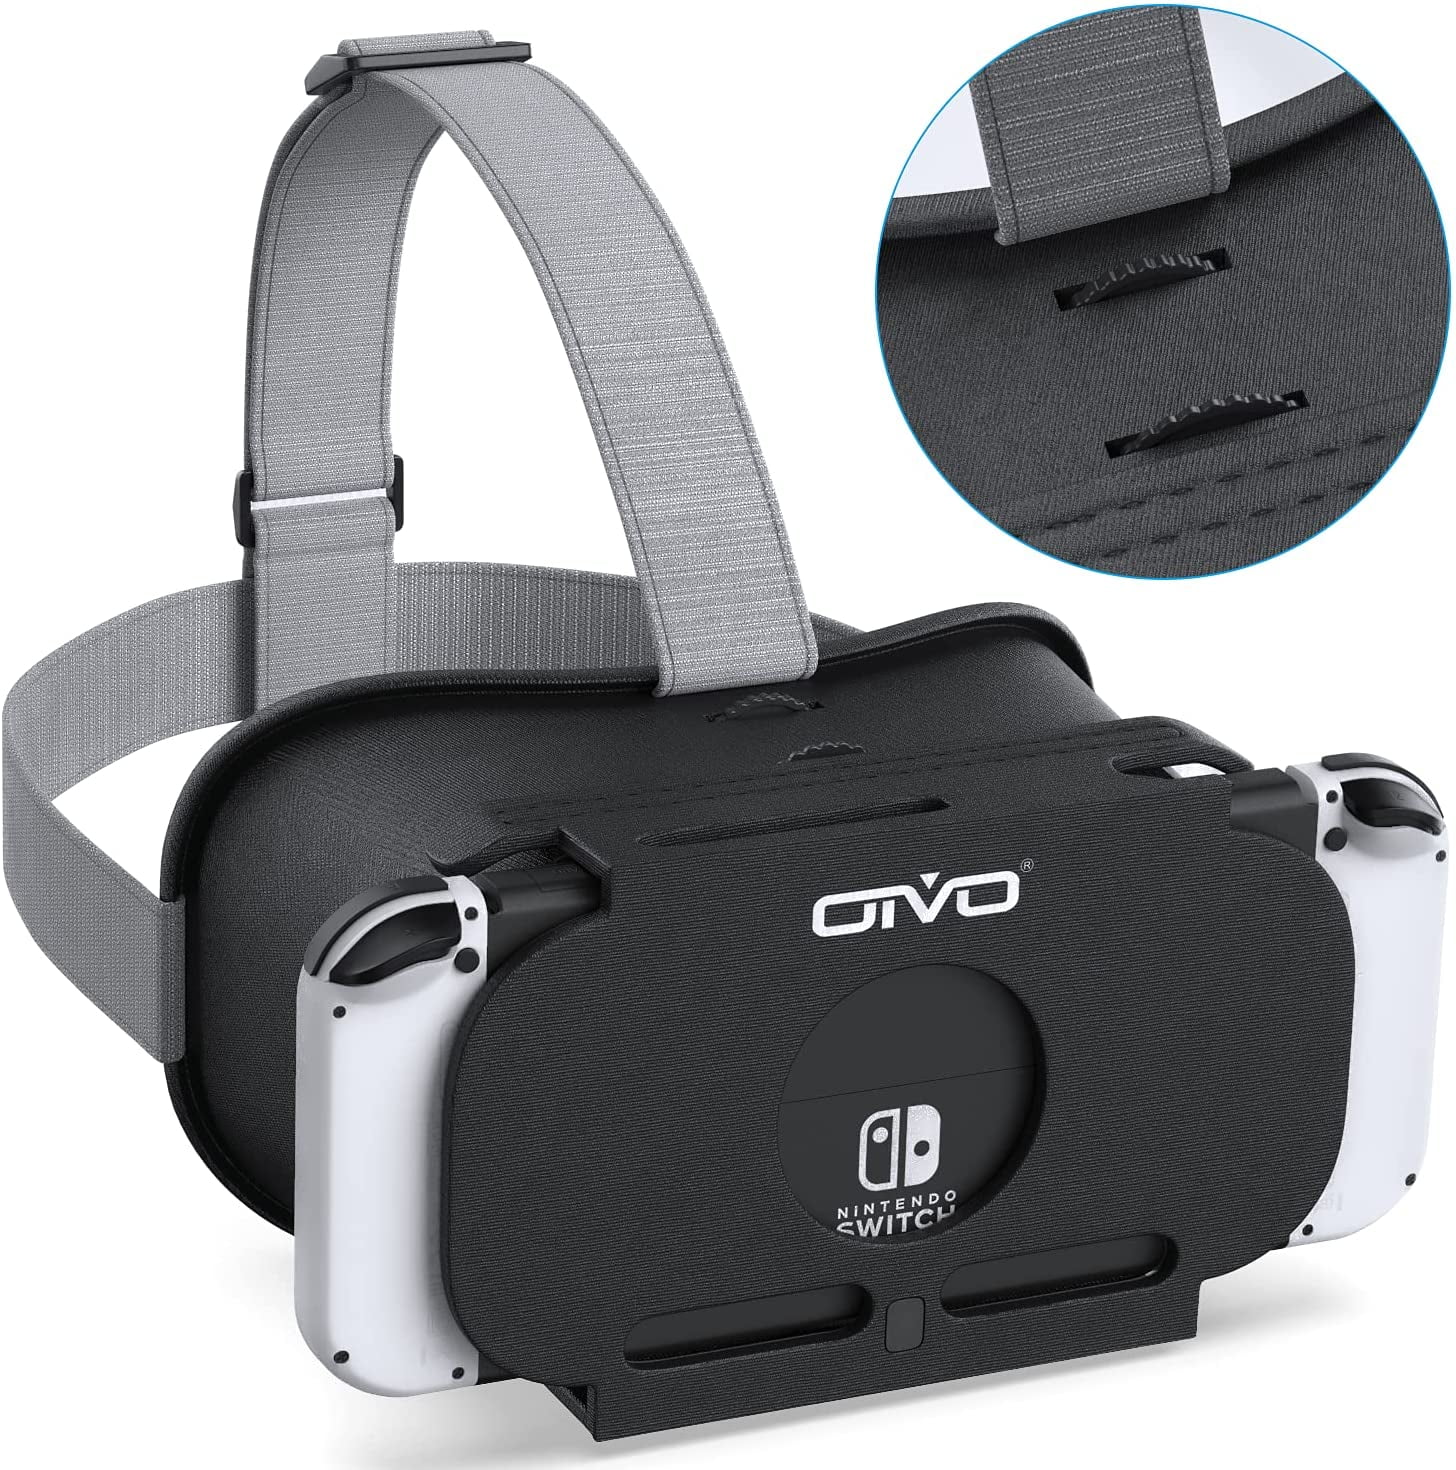 systematisk Før Hej VR Headset for Nintendo Switch & Switch OLED Model, OIVO Labo VR Goggles  Glasses with Adjustable Lenses - Walmart.com